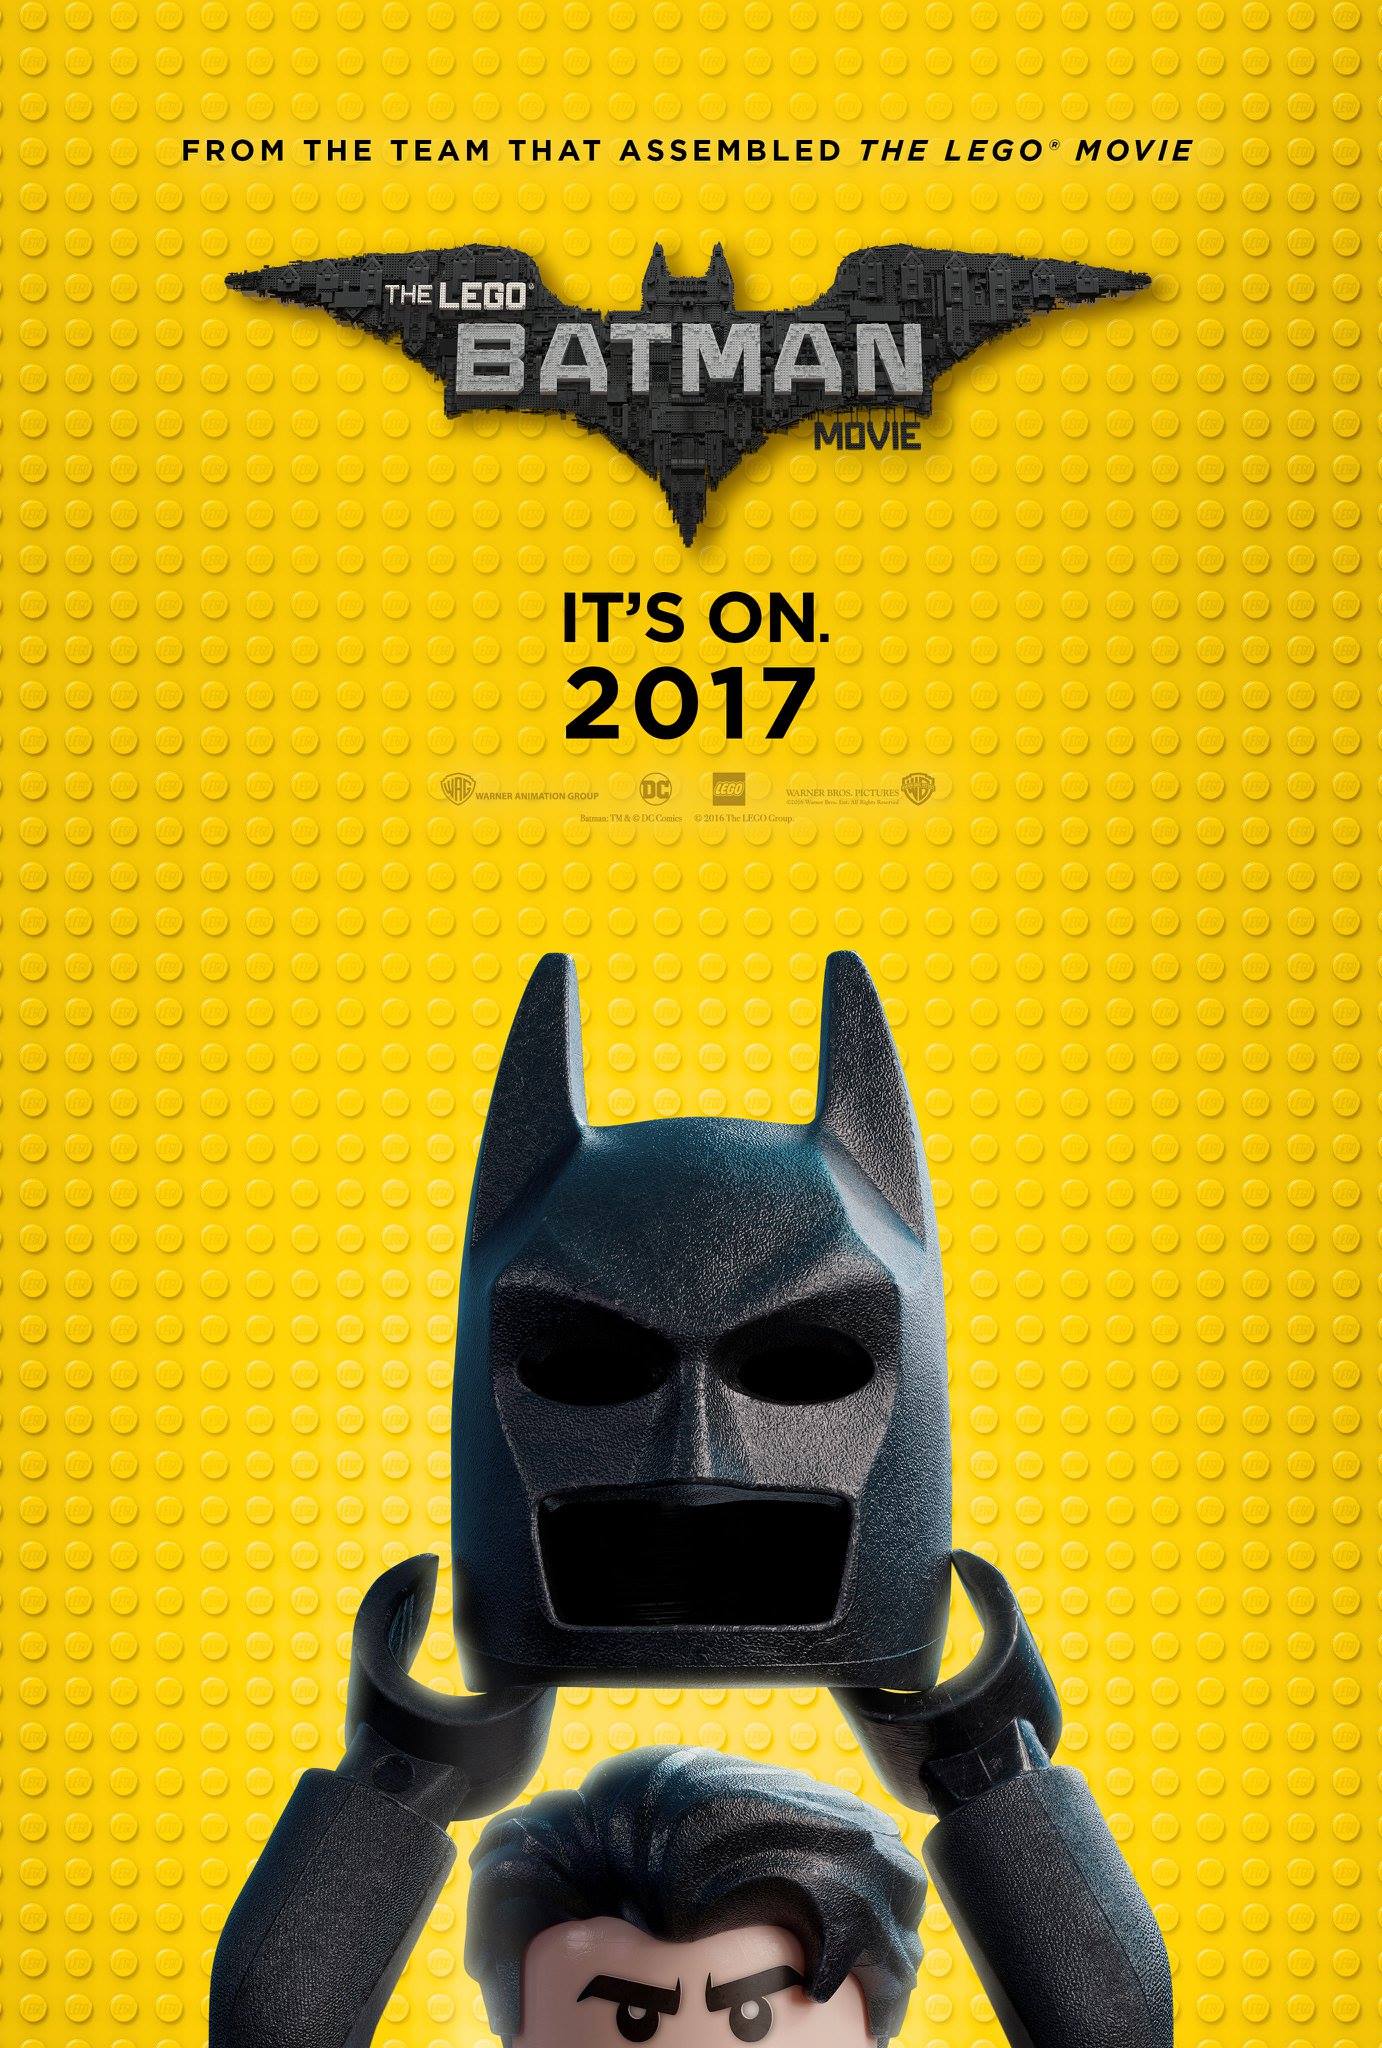 THE LEGO BATMAN - Movieguide | Reviews for Christians